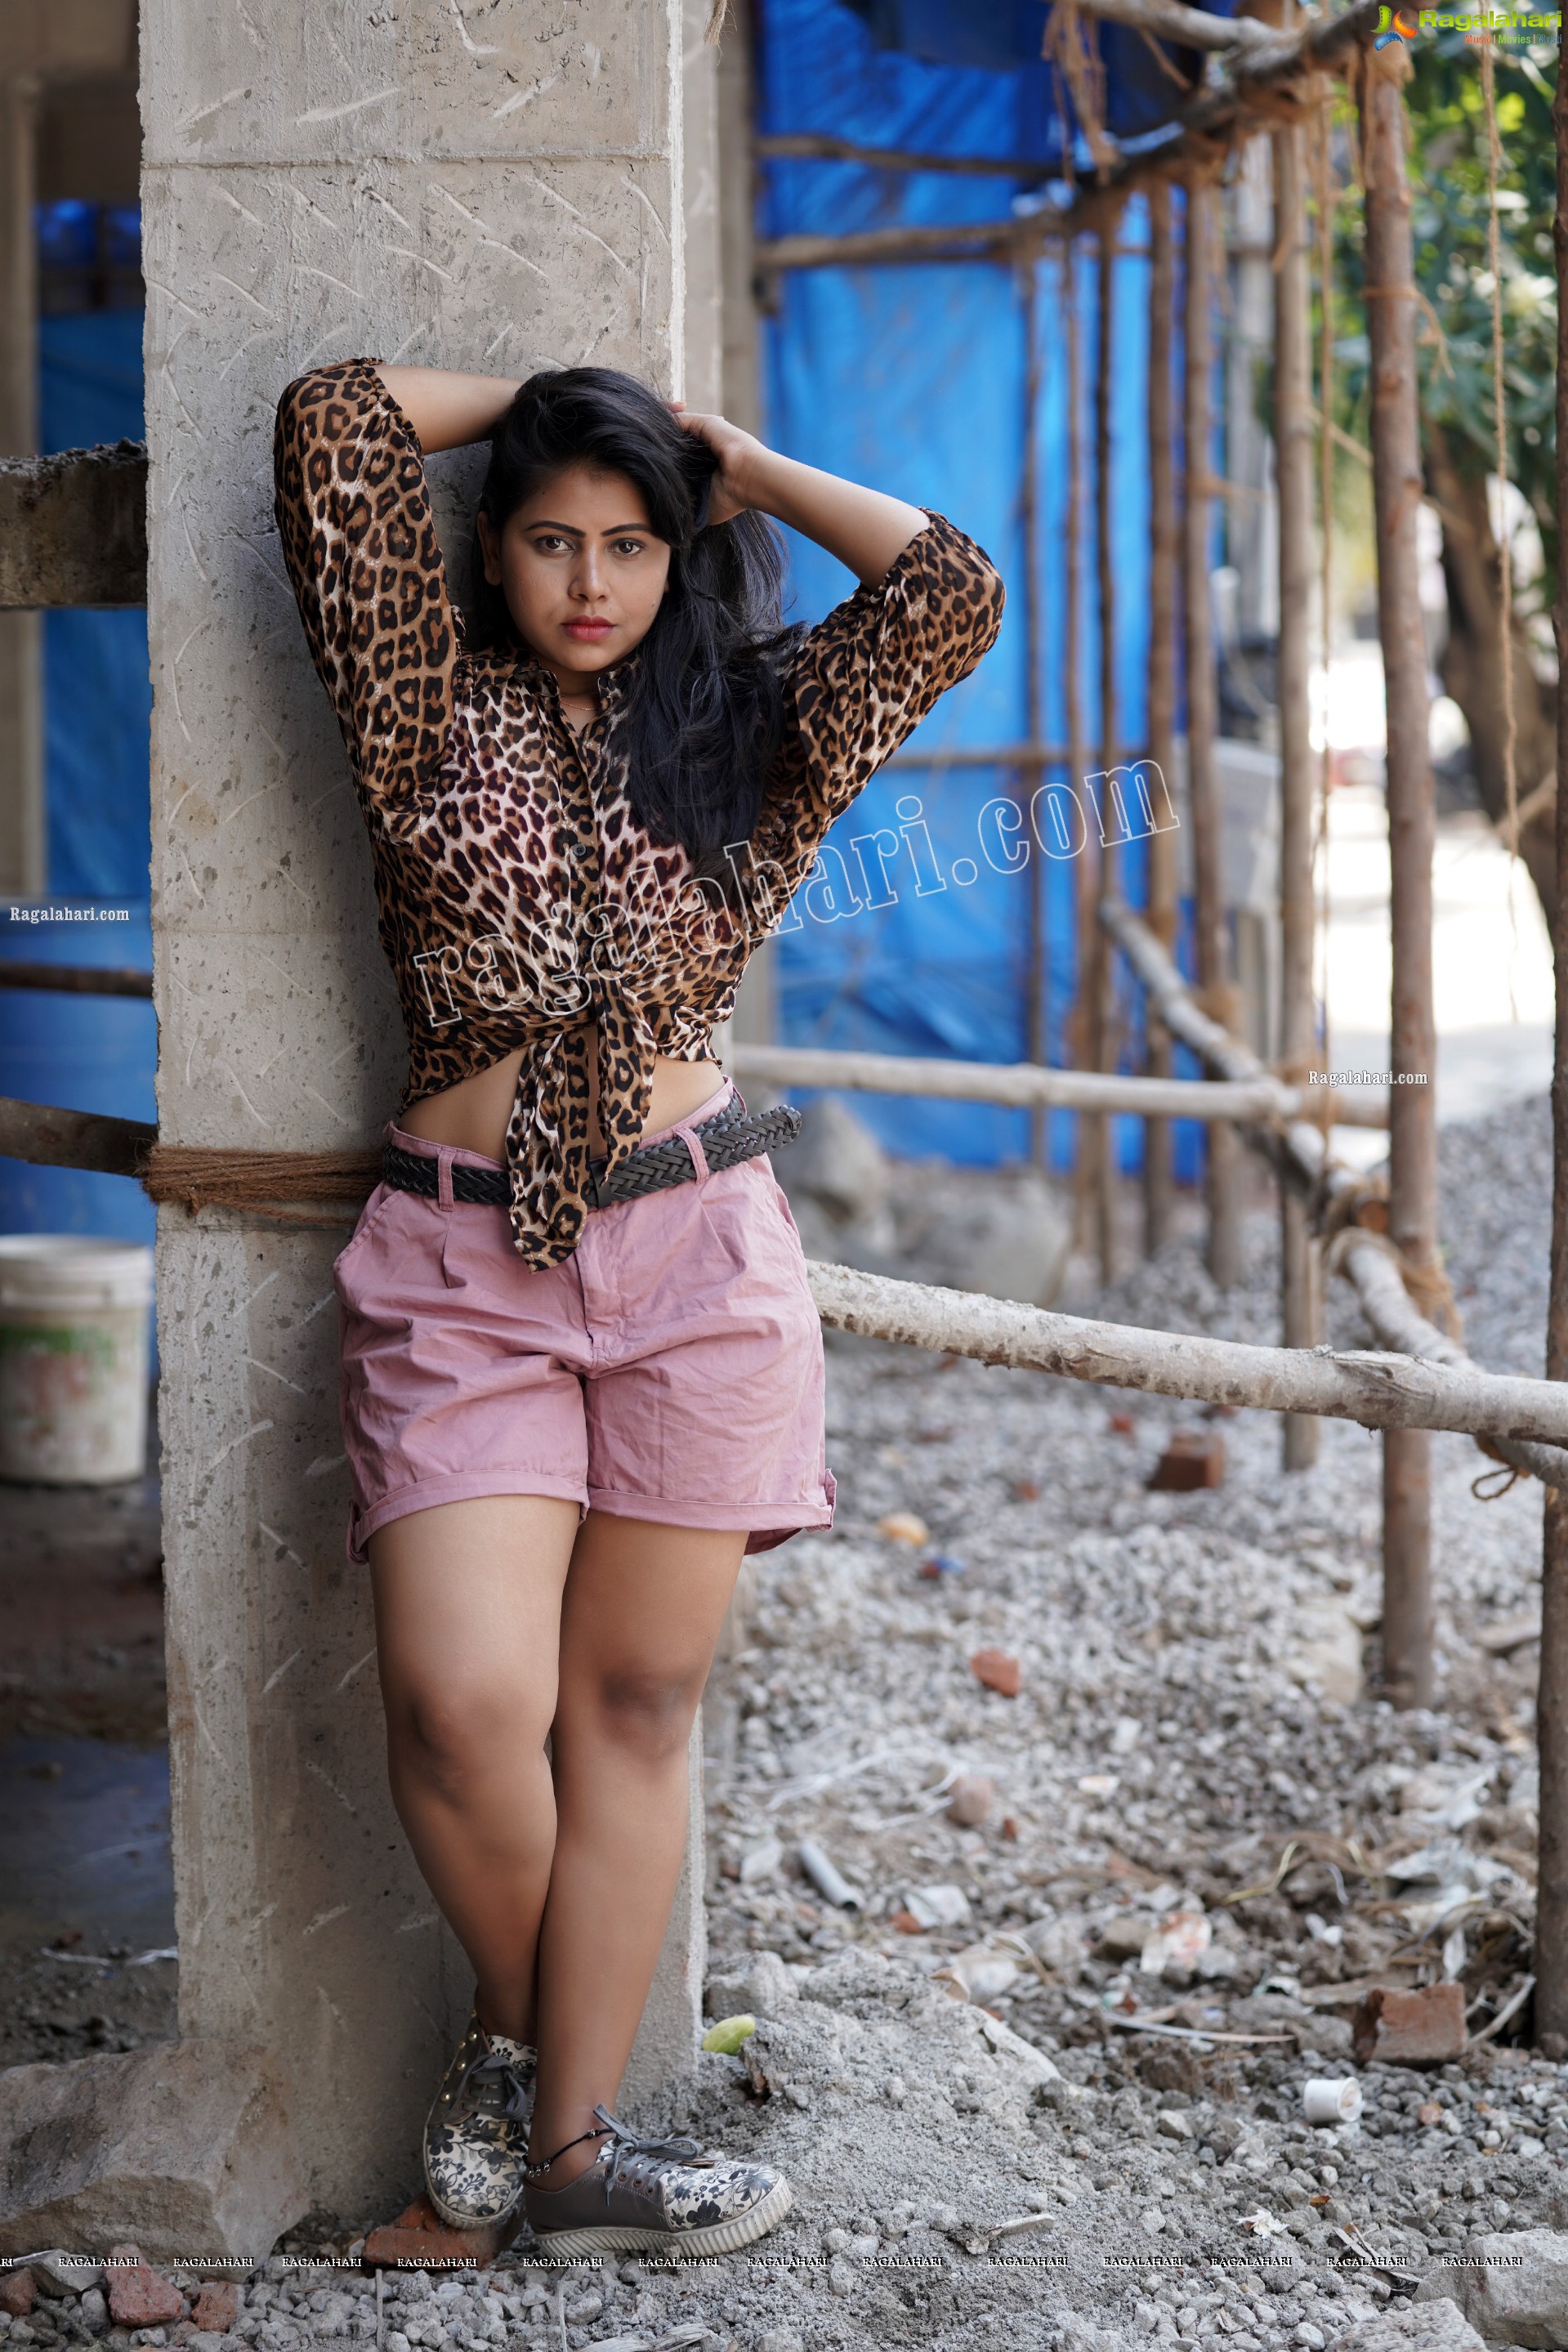 Divya Kottakota in Cheetah Print Top and Shorts, Exclusive Photo Shoot